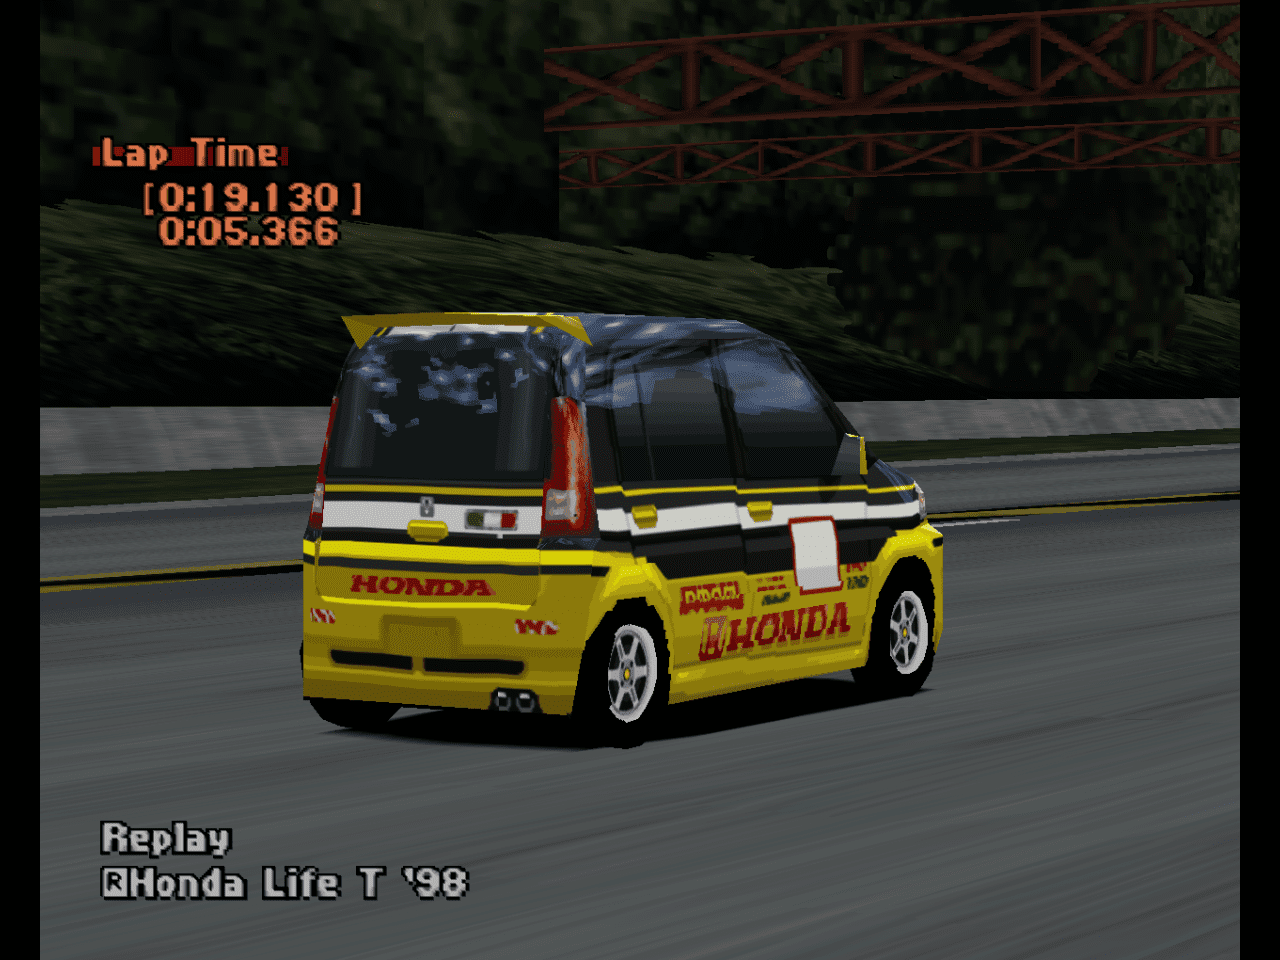 Gran Turismo 3: A-Spec (USA) PS2 ISO - CDRomance